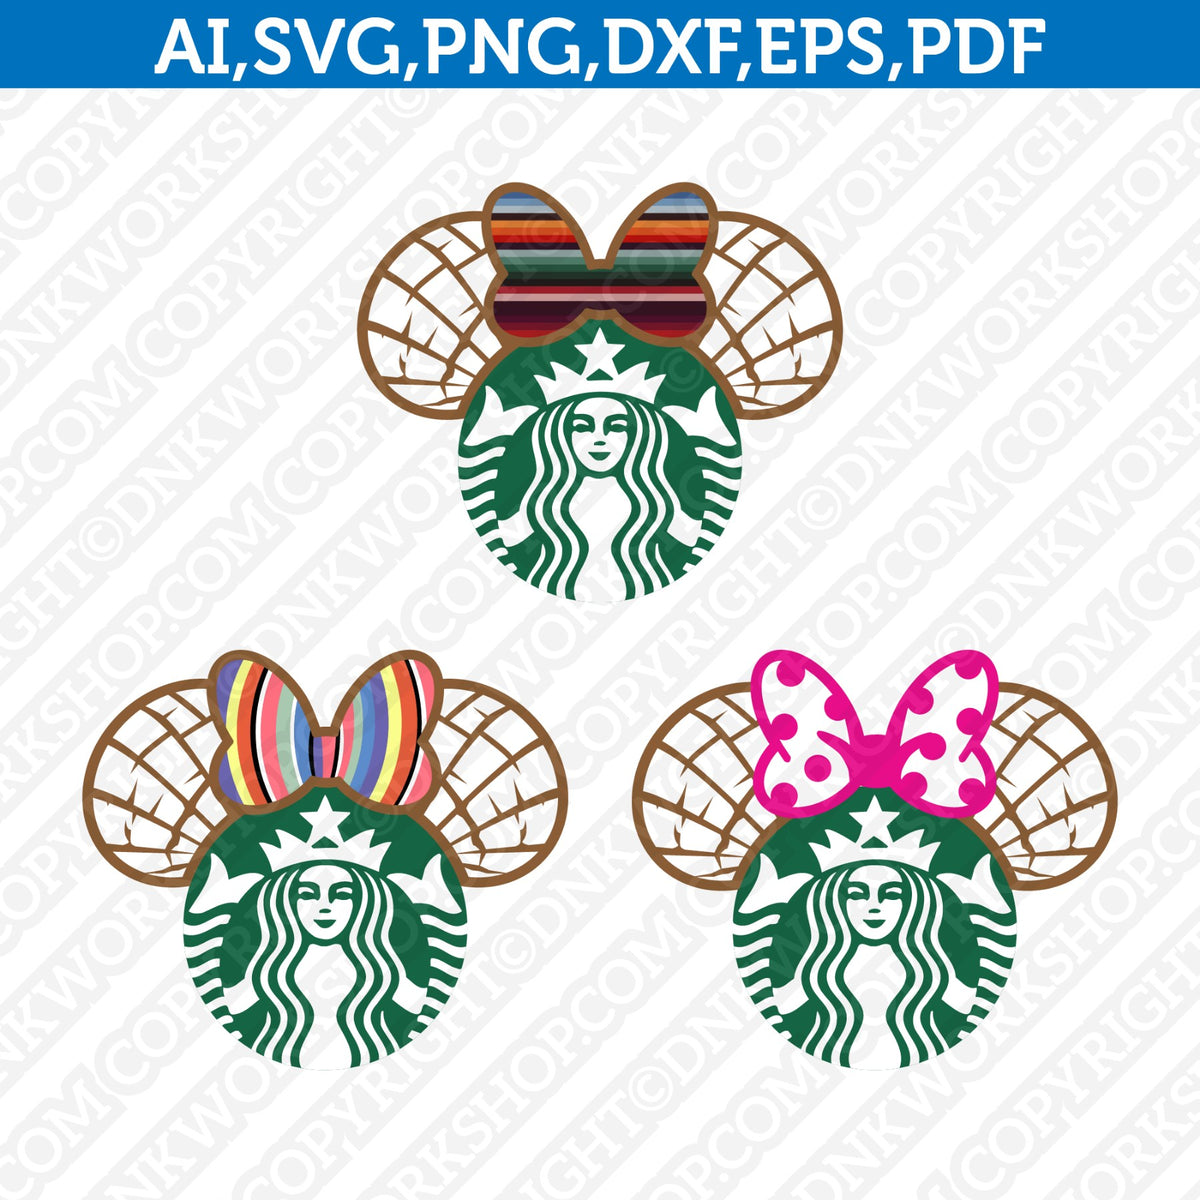 Concha Ears SVG  Starbucks Cup - Gina C. Creates